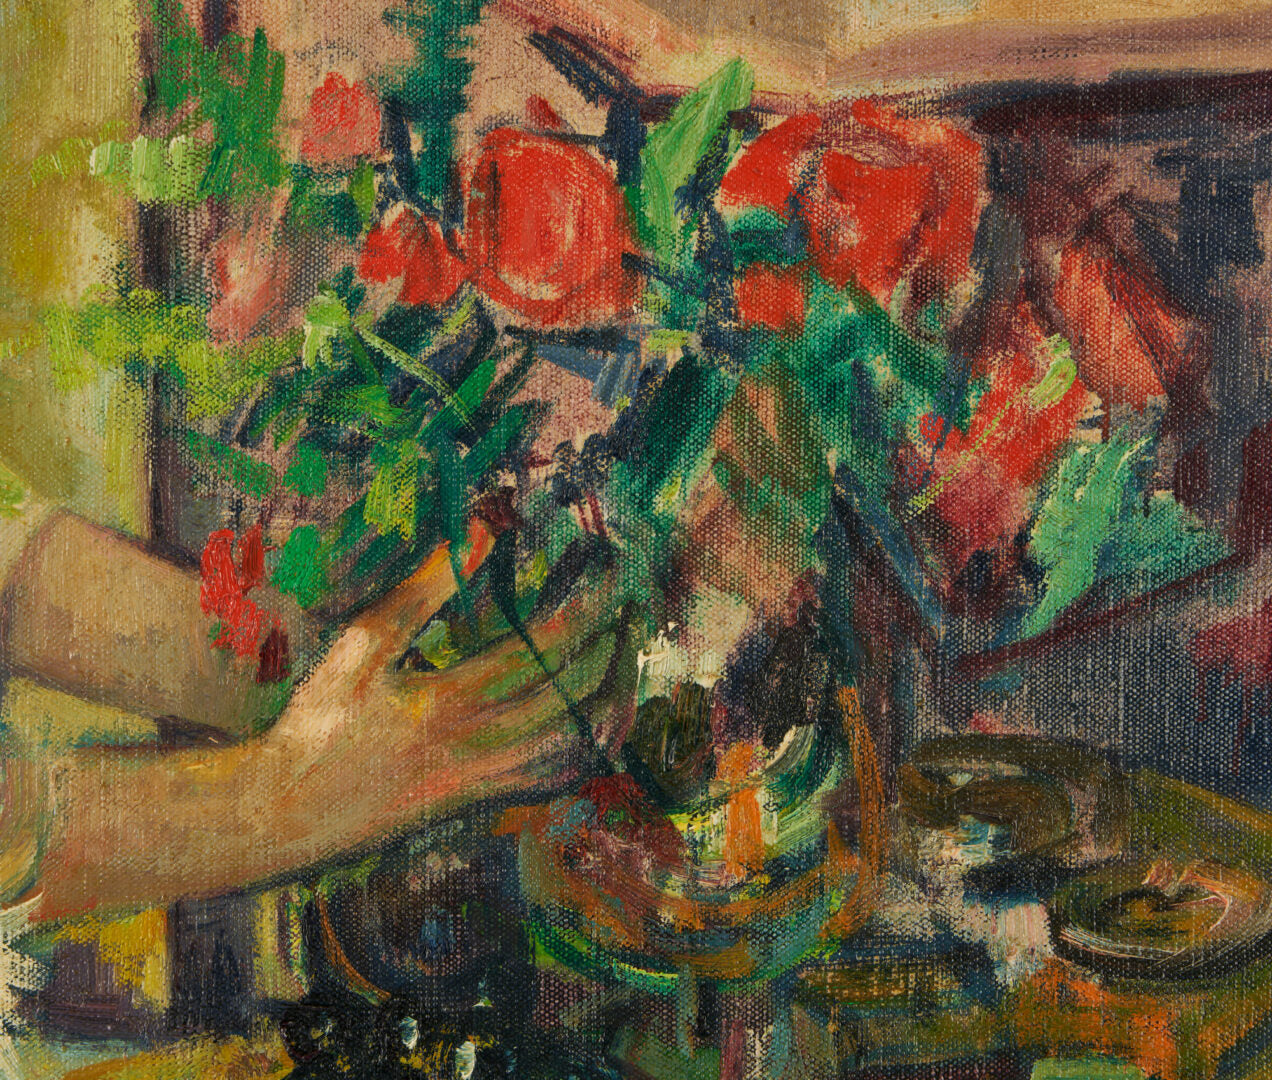 Luigi Corbellini (France / Italy, 1901-1968) / Girl Arranging Flowers